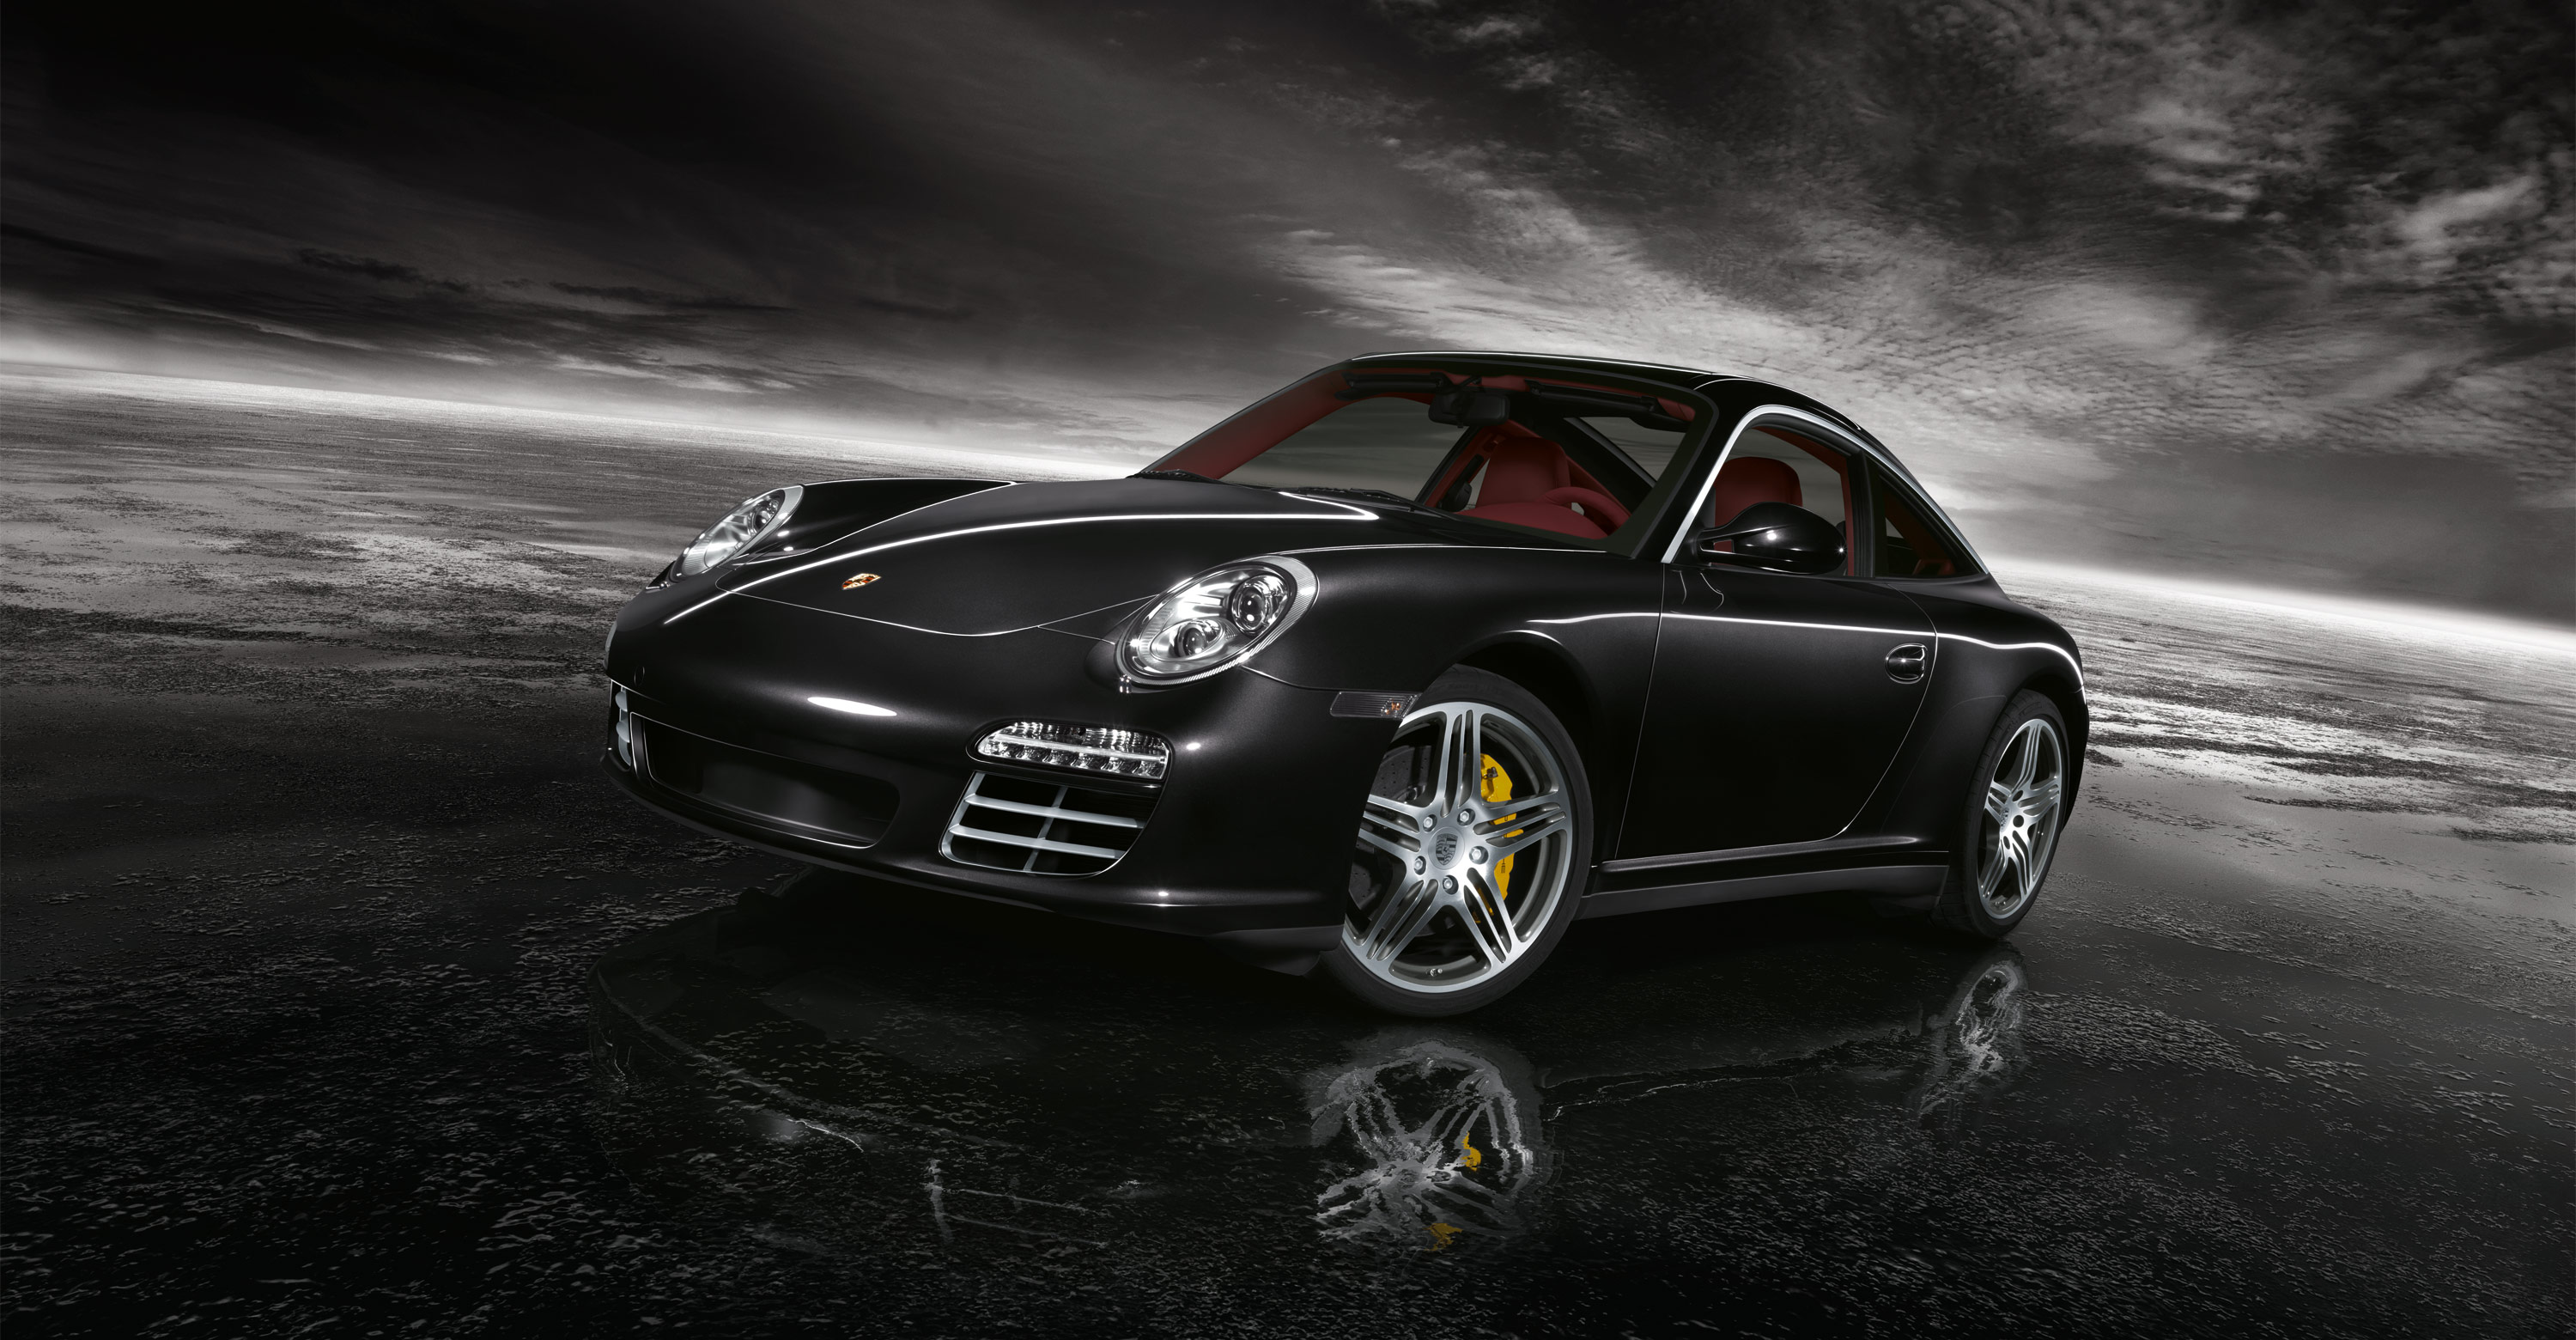 Black Porsche Targa 4s Wallpaper